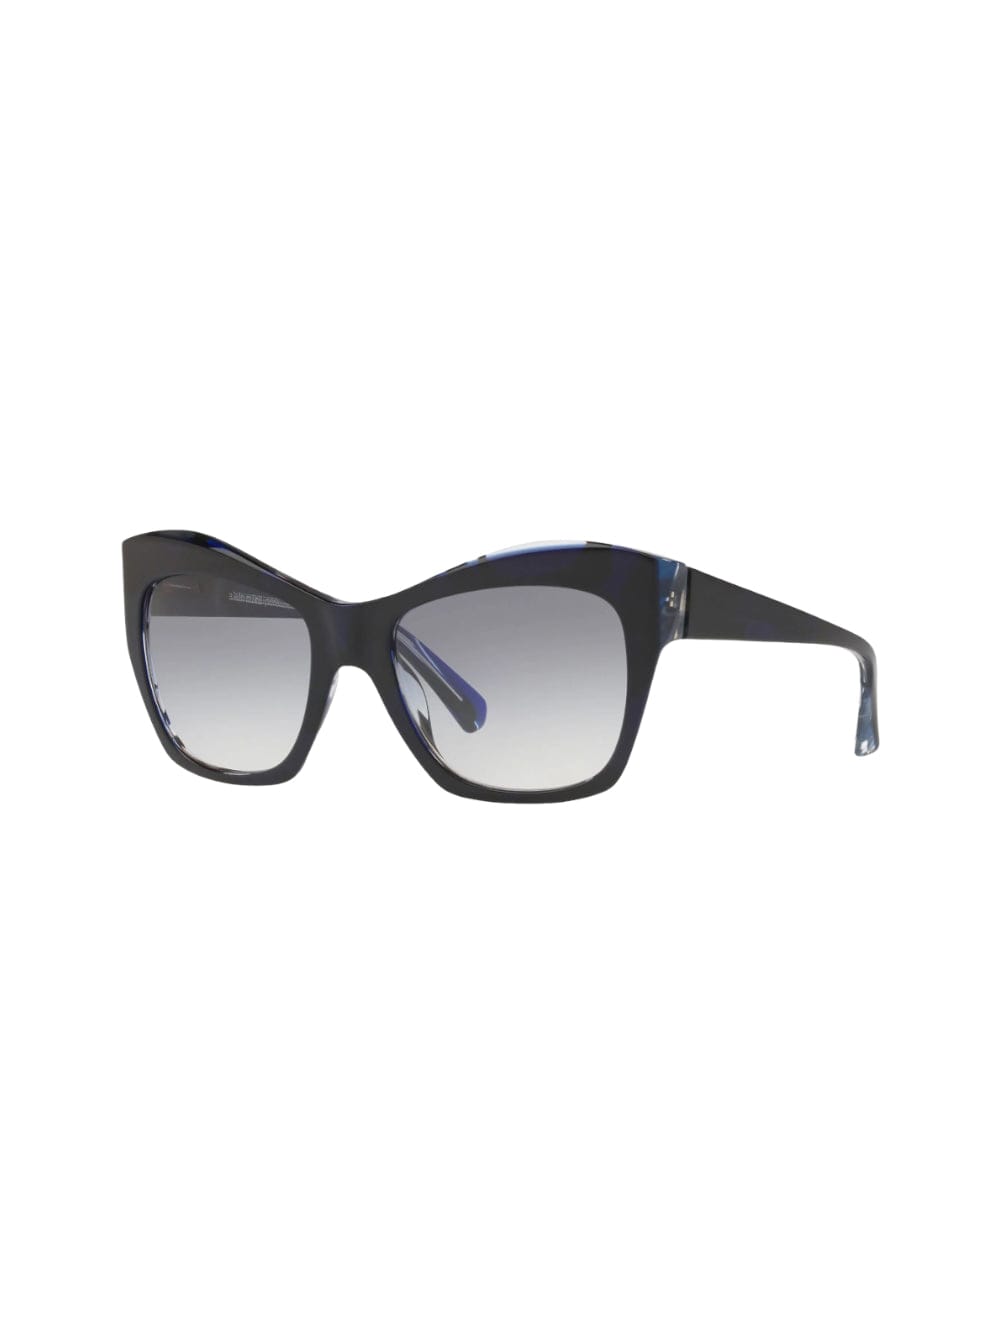 Shop Alain Mikli Nuages - 5043 - Black / Blu Sunglasses